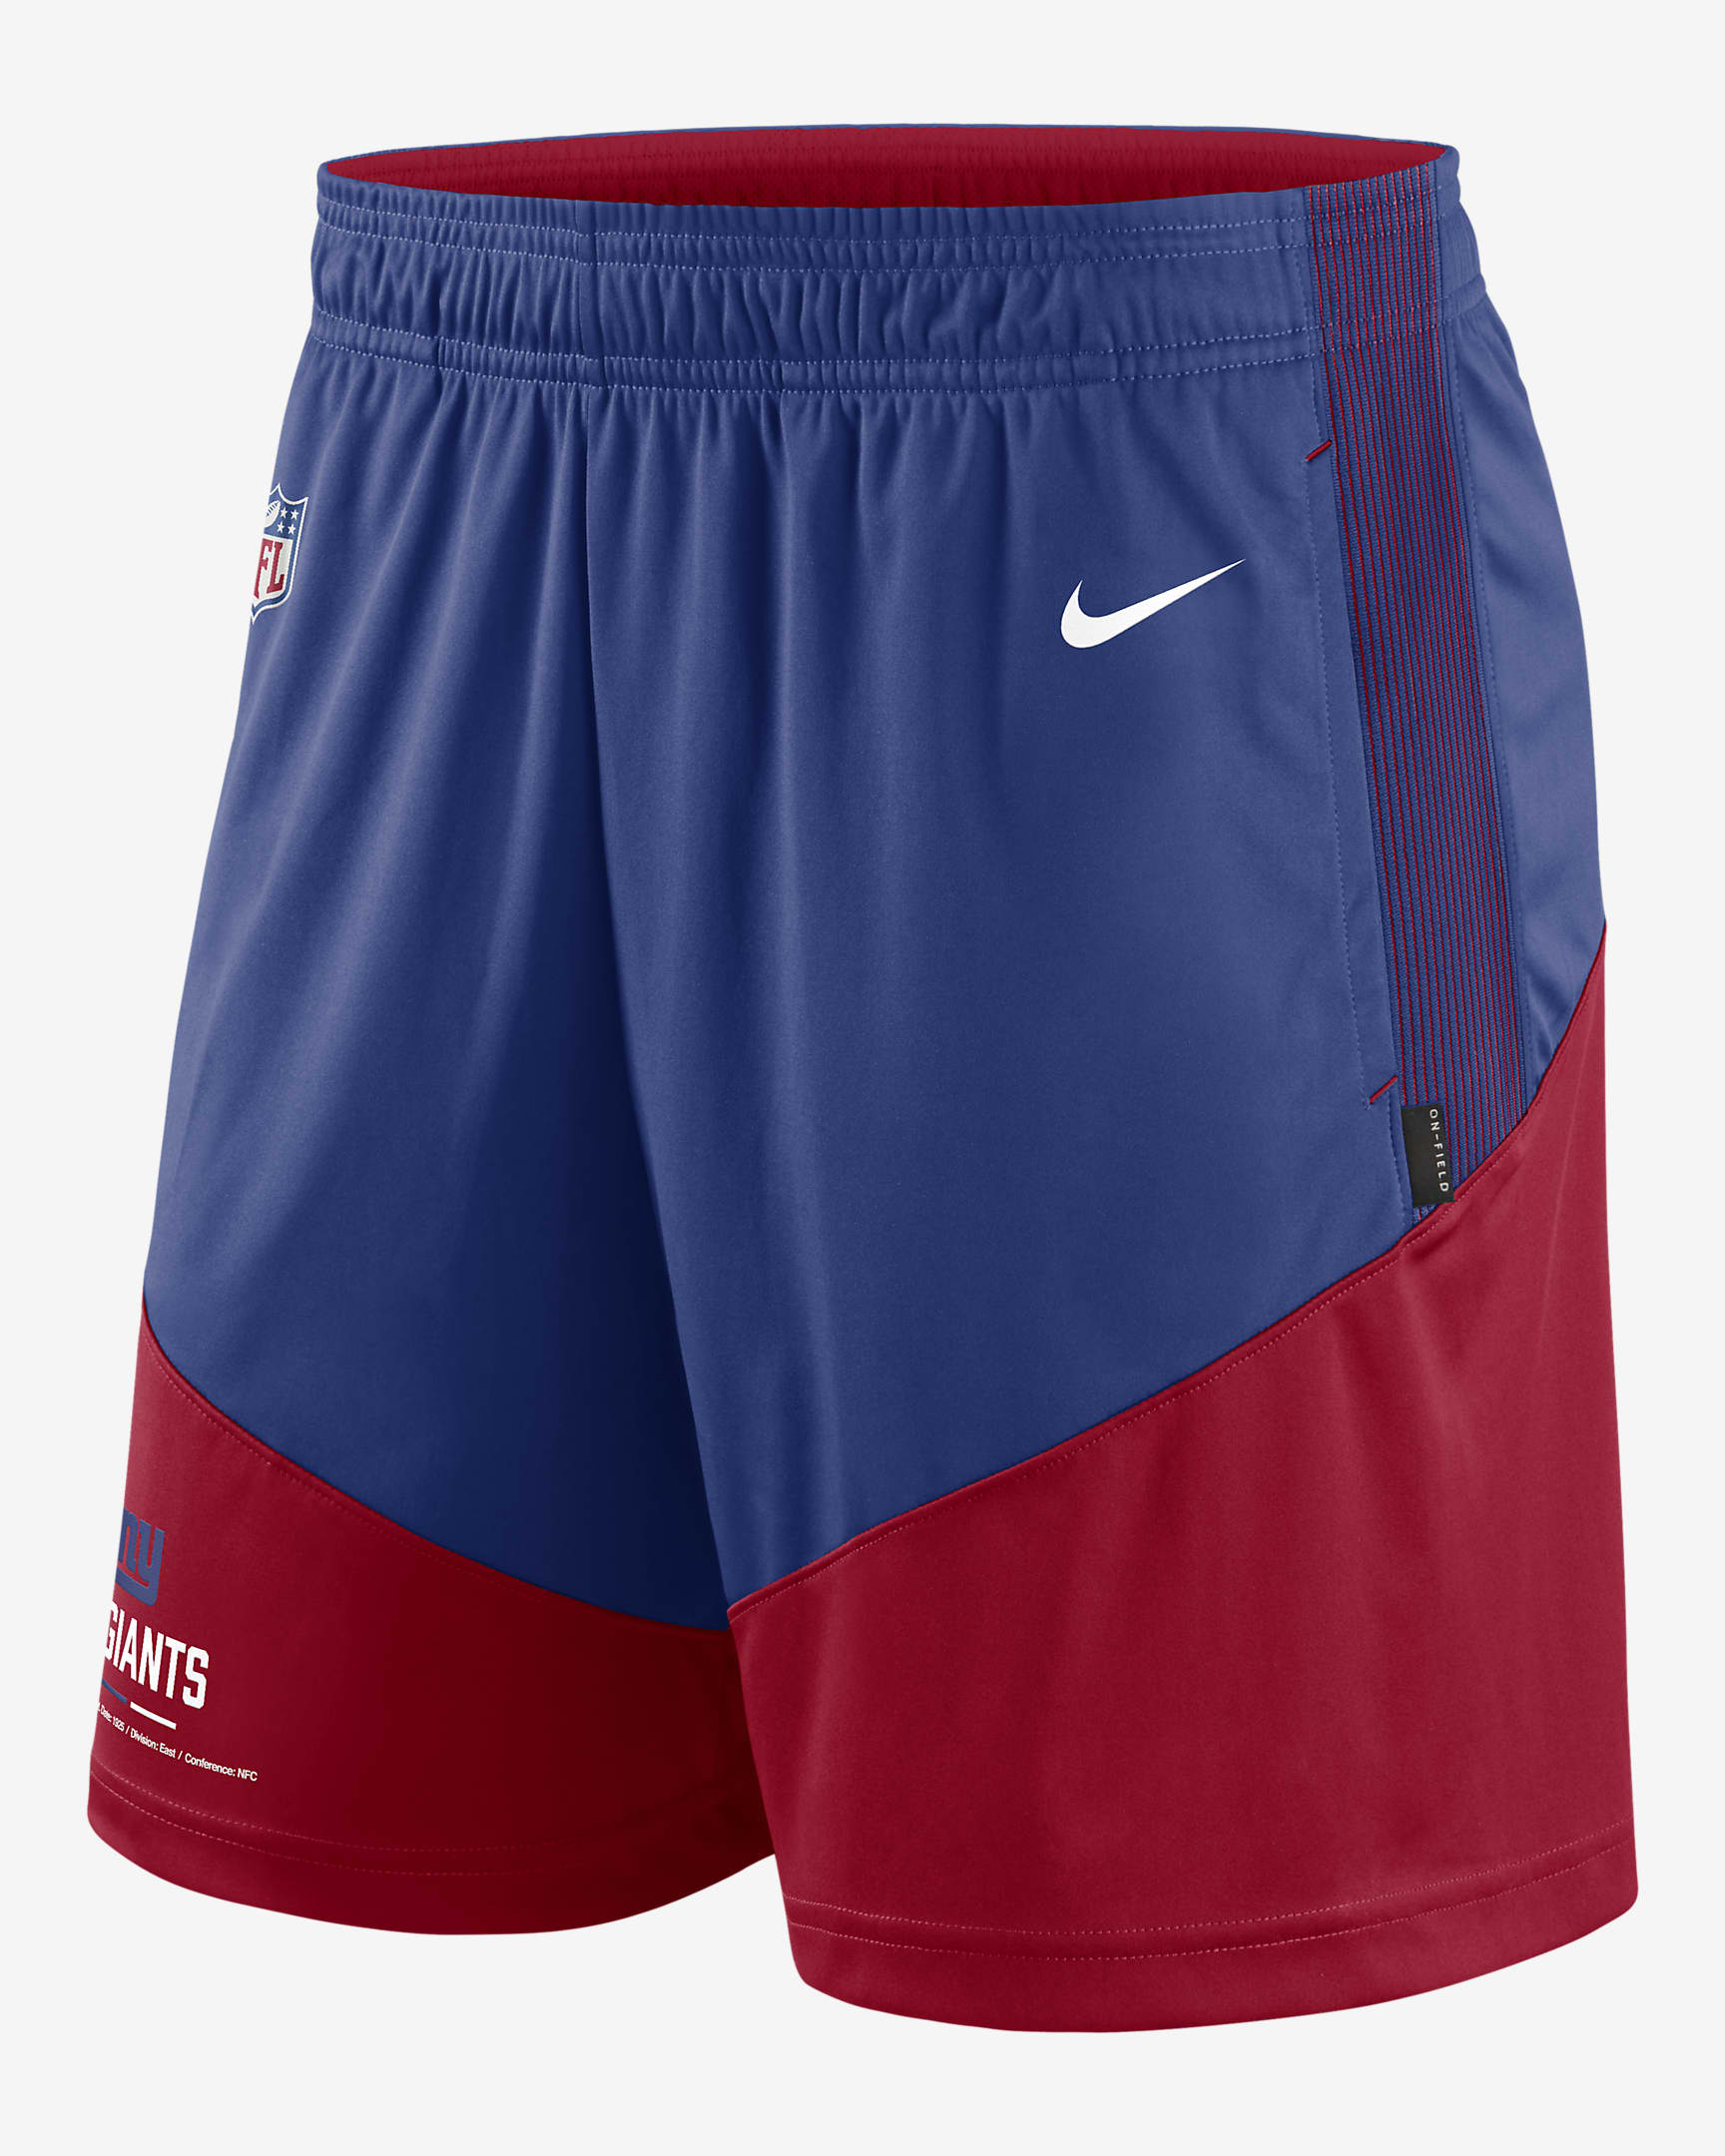 Nike Dri-FIT Primary Lockup (NFL New York Giants) Men's Shorts. Nike.com